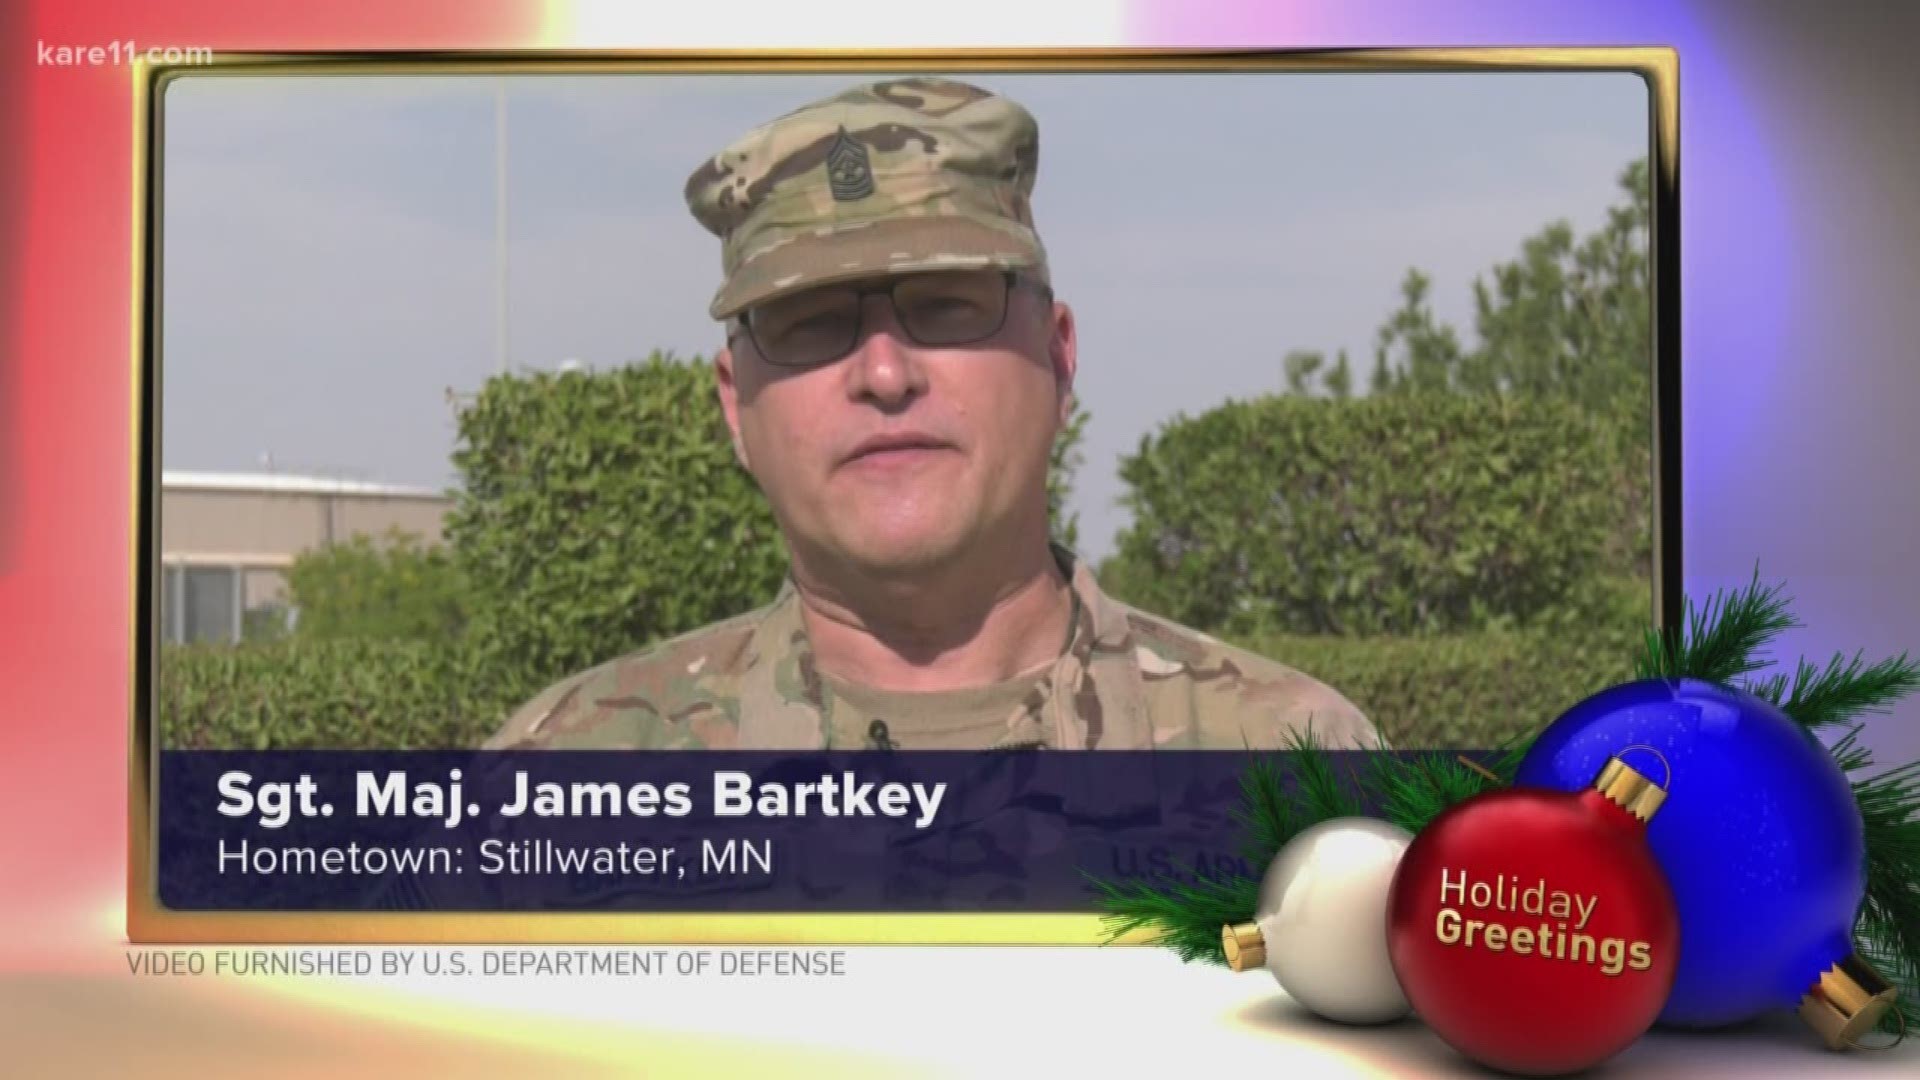 Sgt. Maj. James Bartkey from Stillwater, Minn. sends holiday greetings.